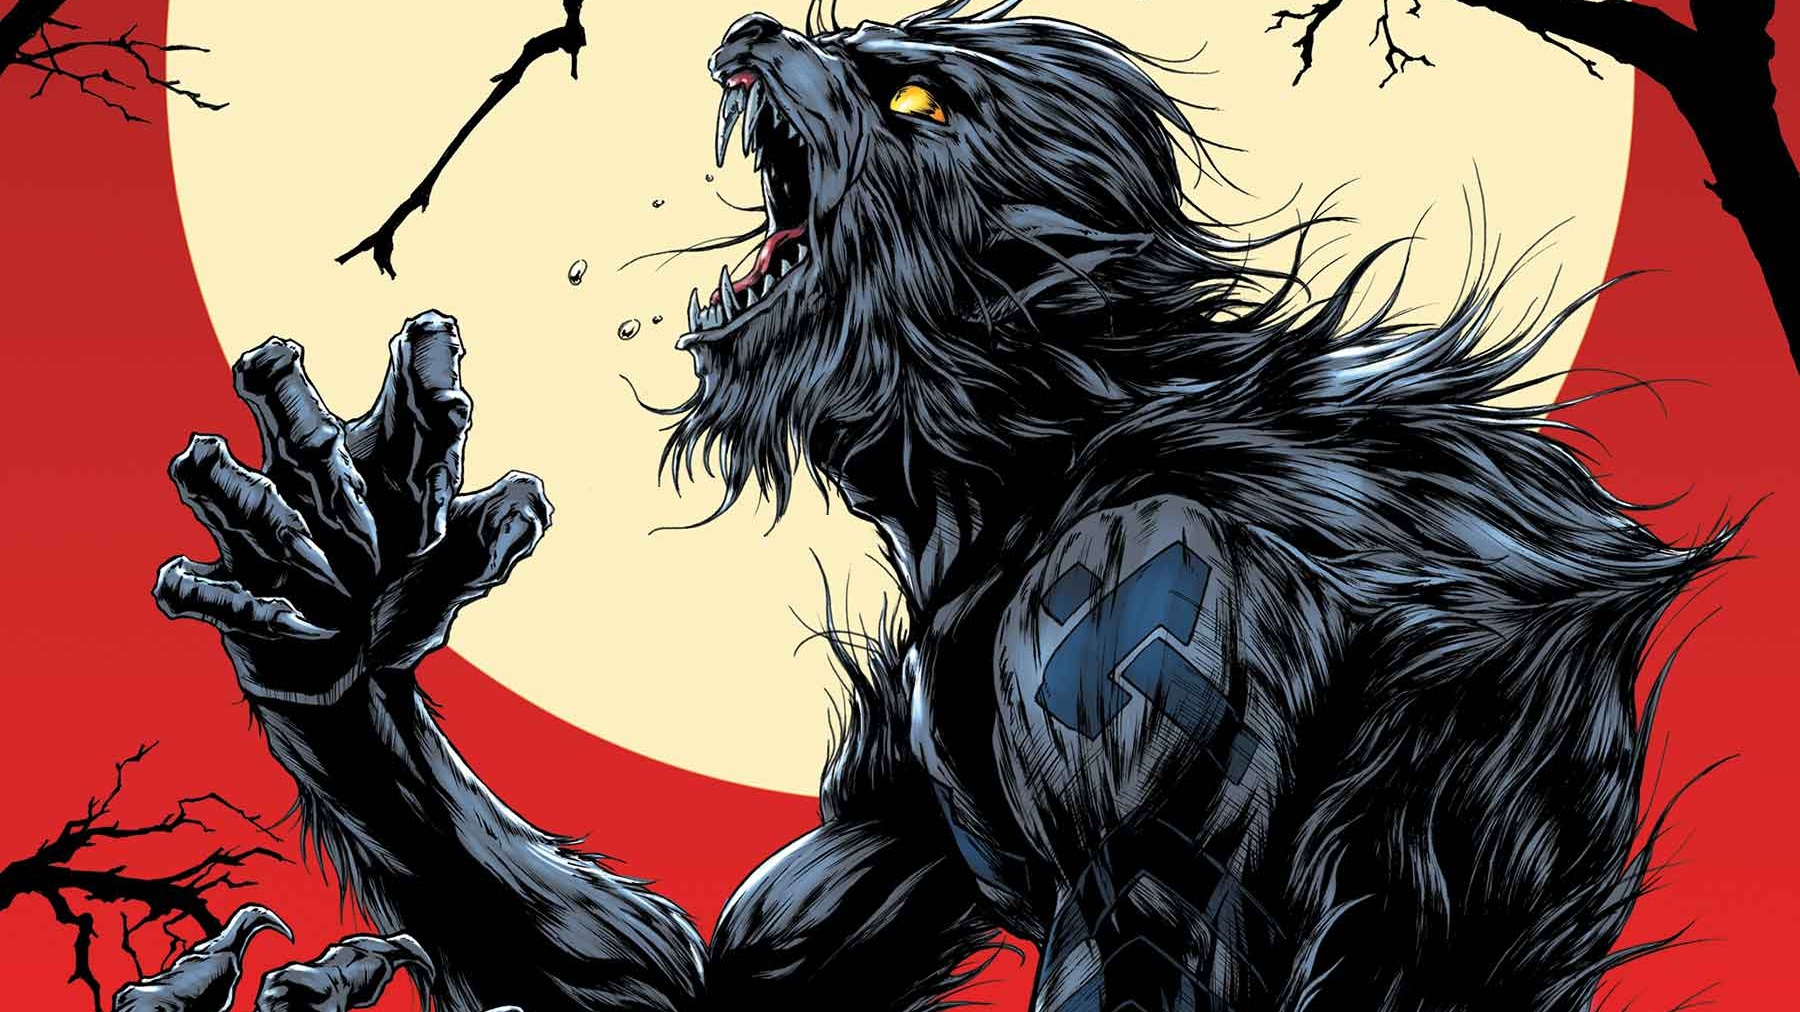 The cast of Werewolf by Night : r/marvelstudios